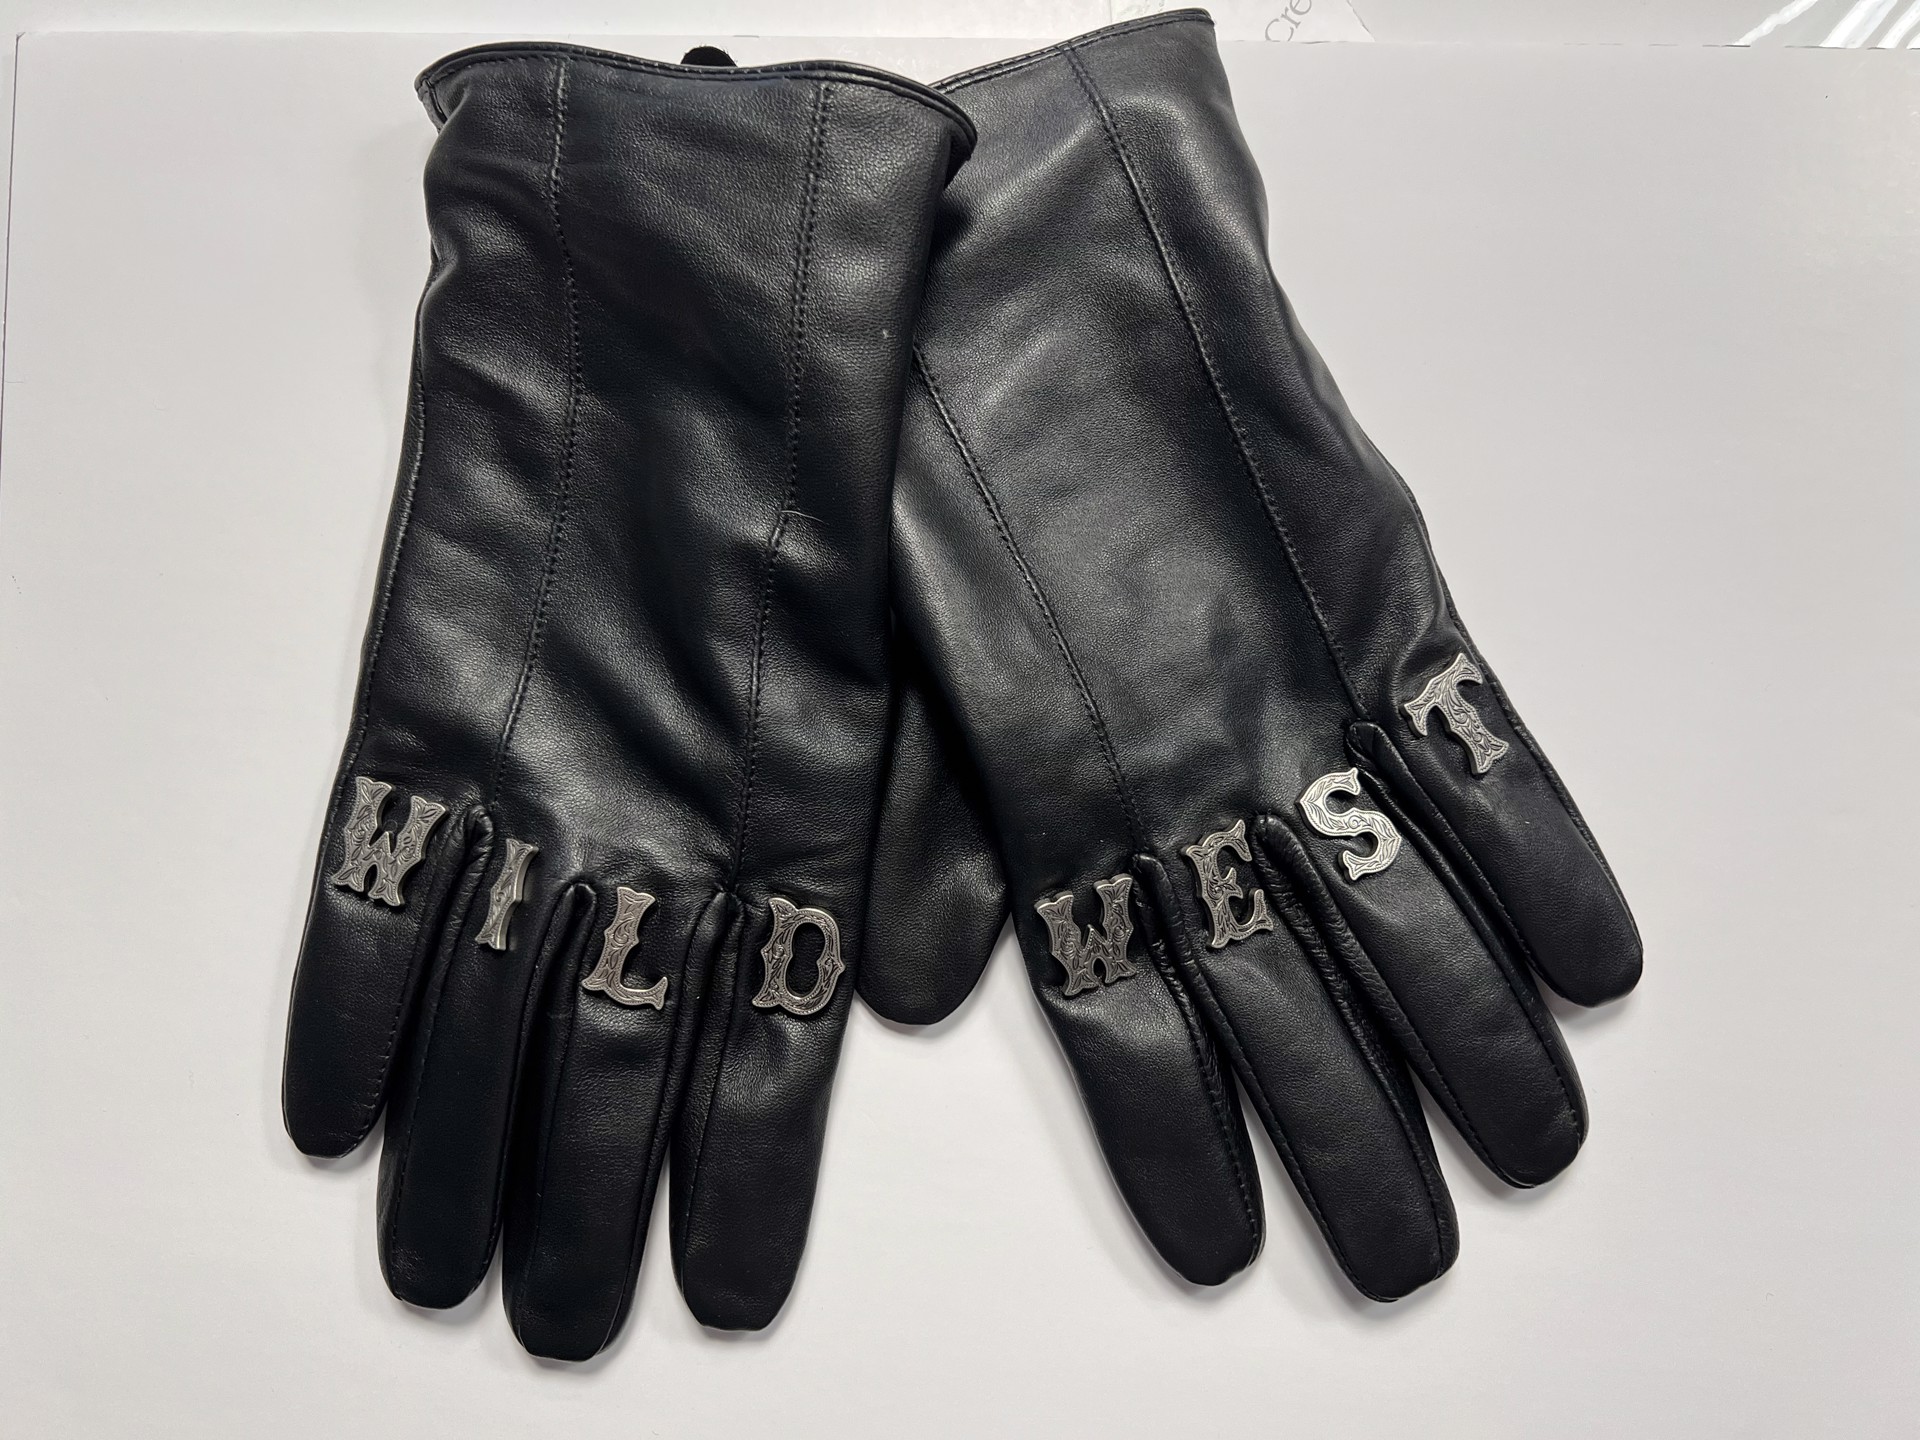 RopeTrix Gloves by B Shawn Cox